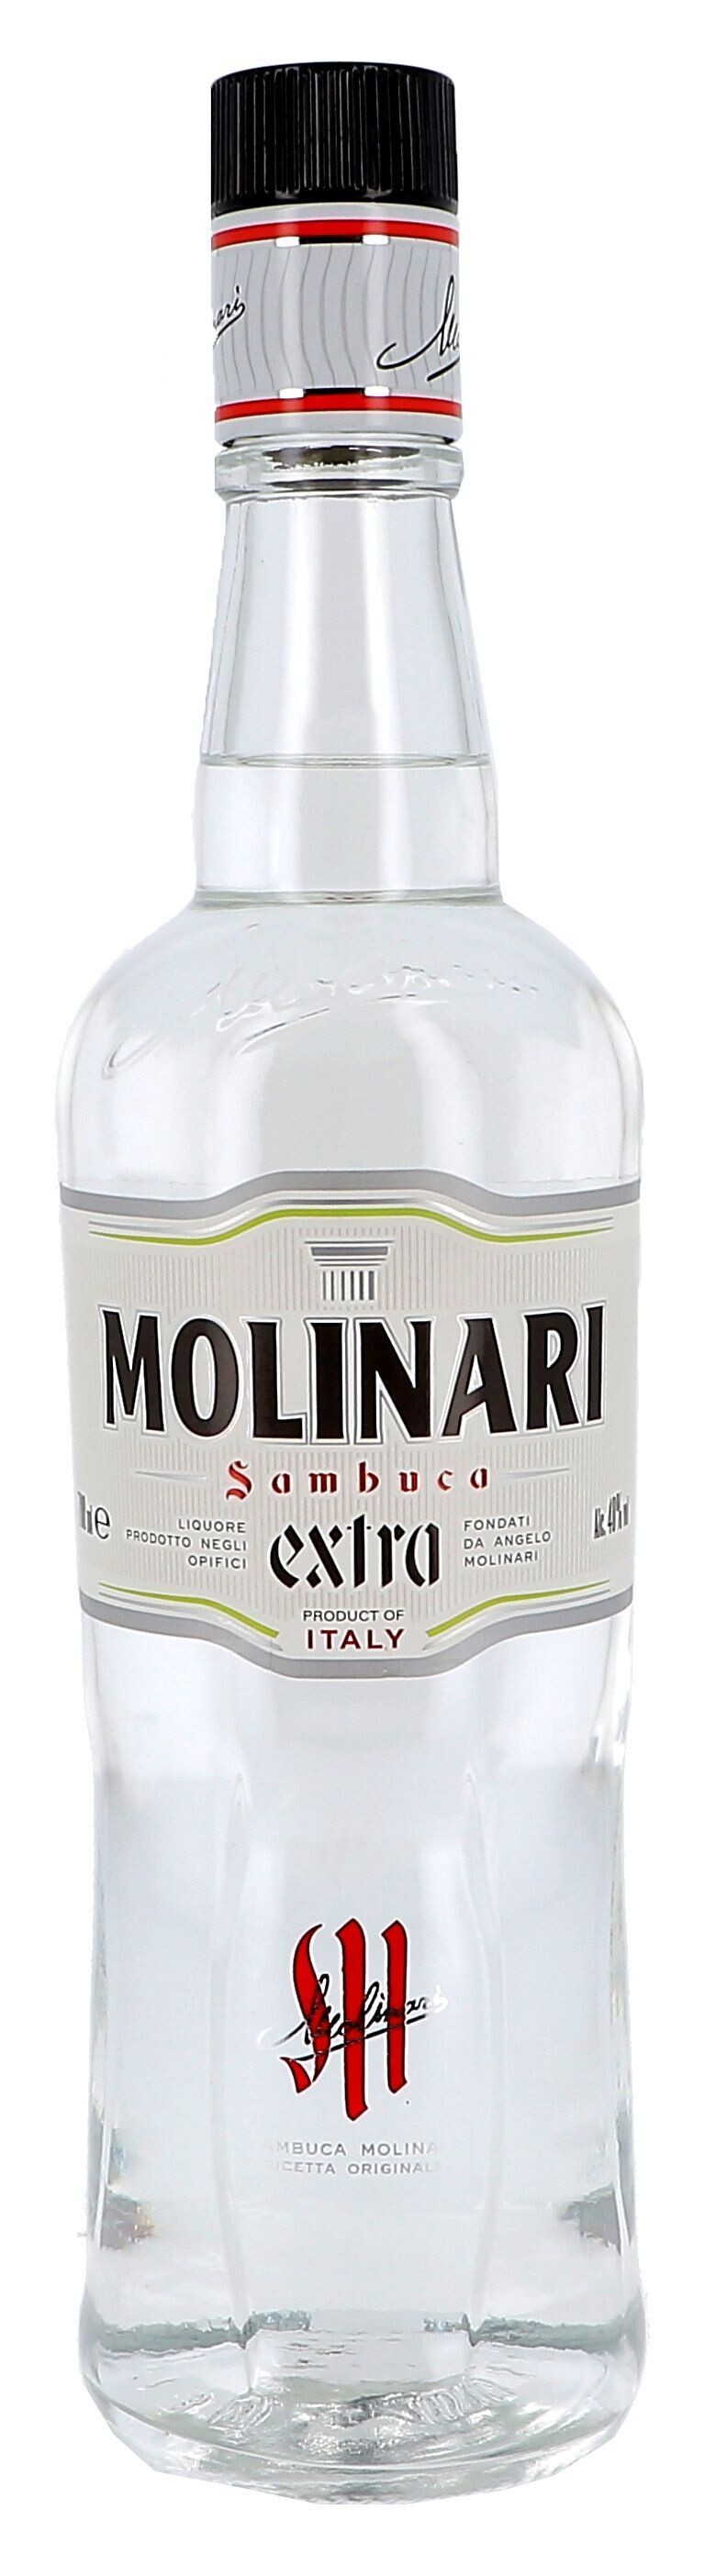 Molinari Sambuca Extra 70cl 40% Anise Flavoured Liqueur